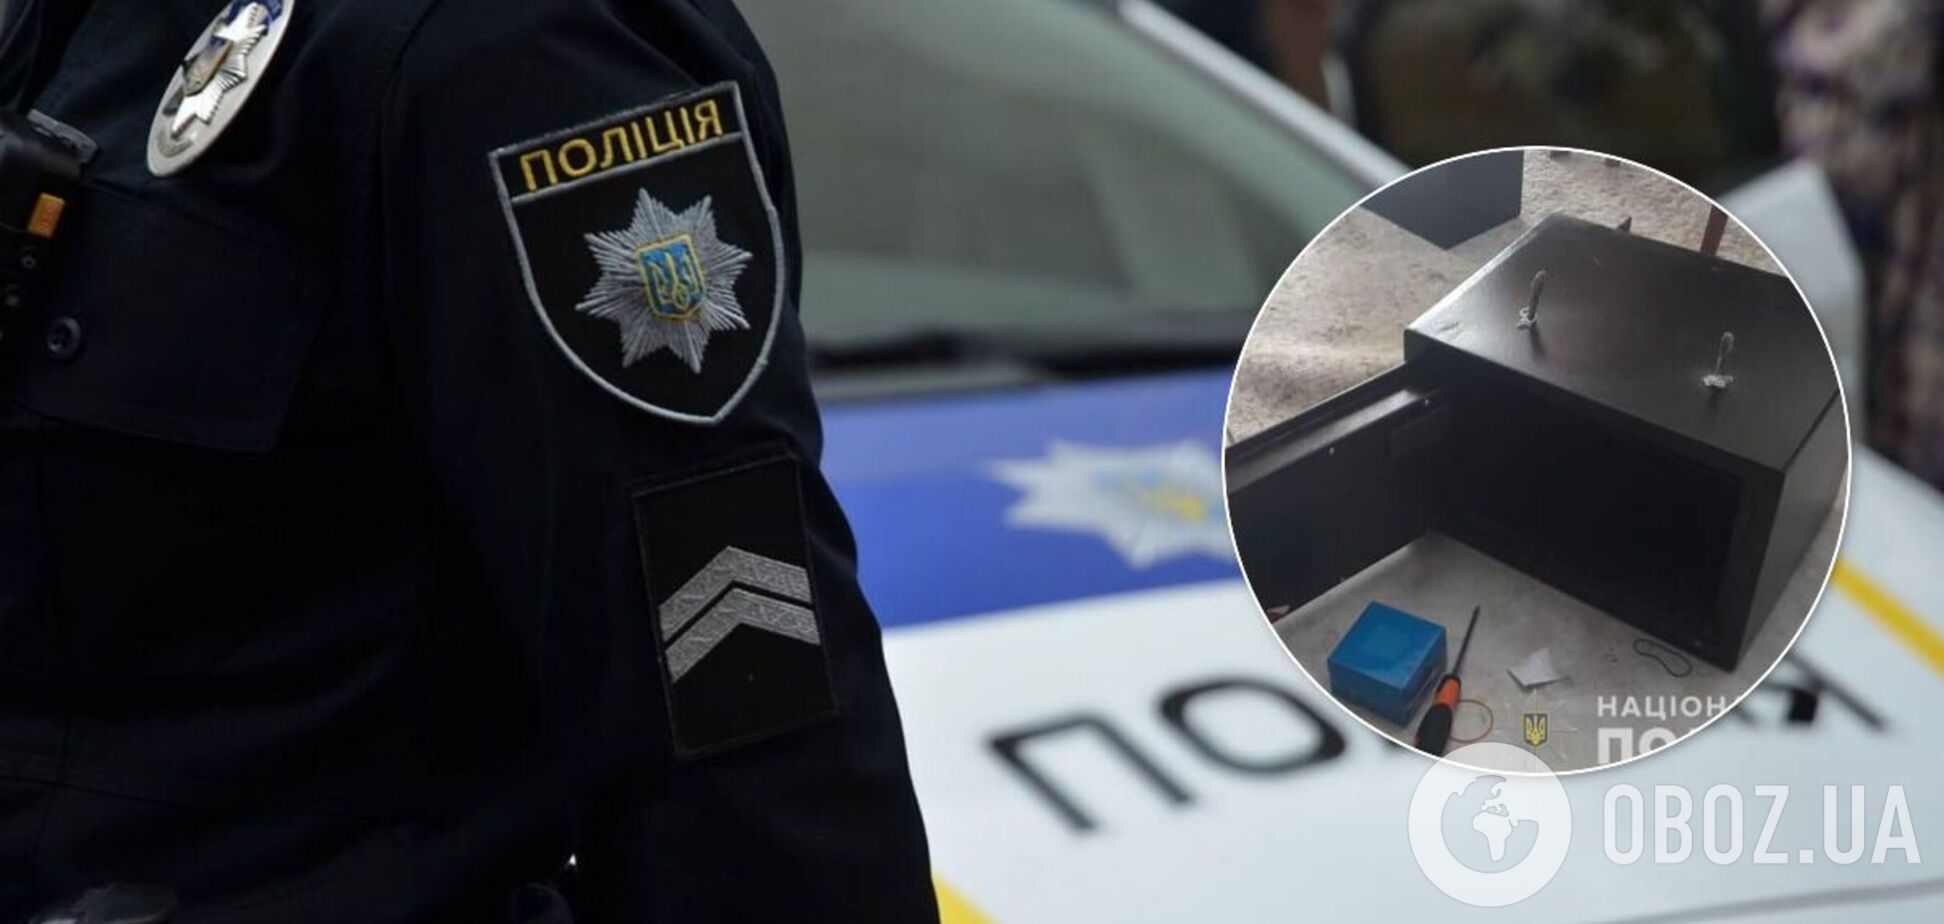 Из дома бизнесмена на Харьковщине похитили почти 8 млн грн